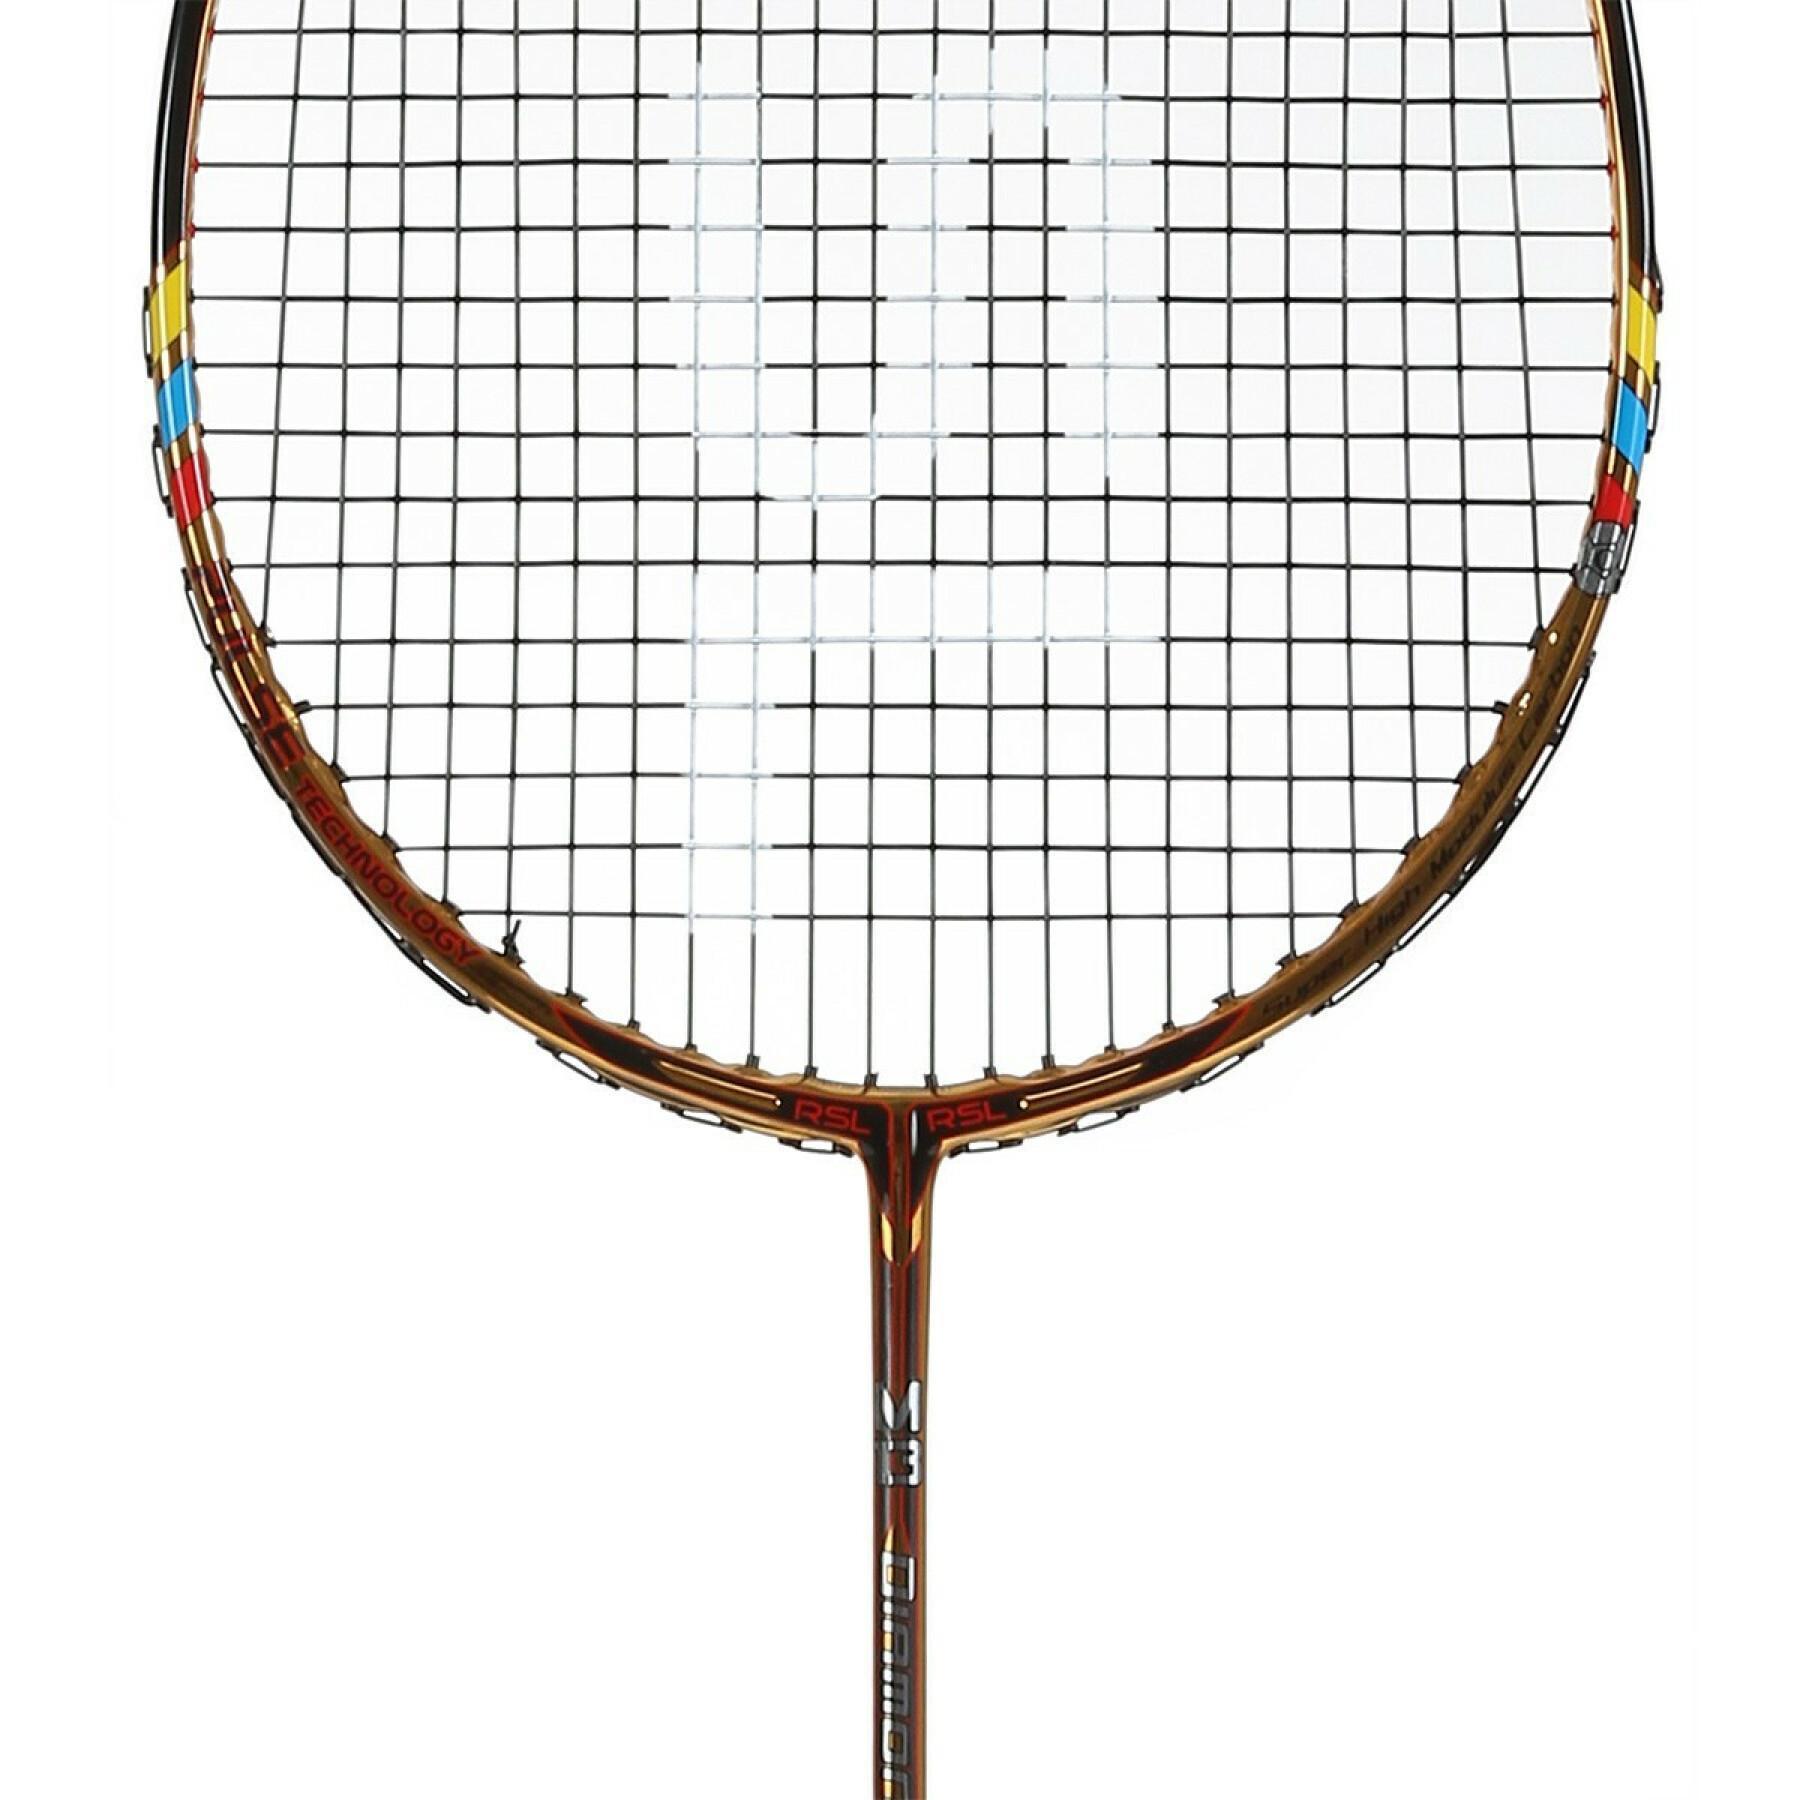 Raquette de badminton RSL X7